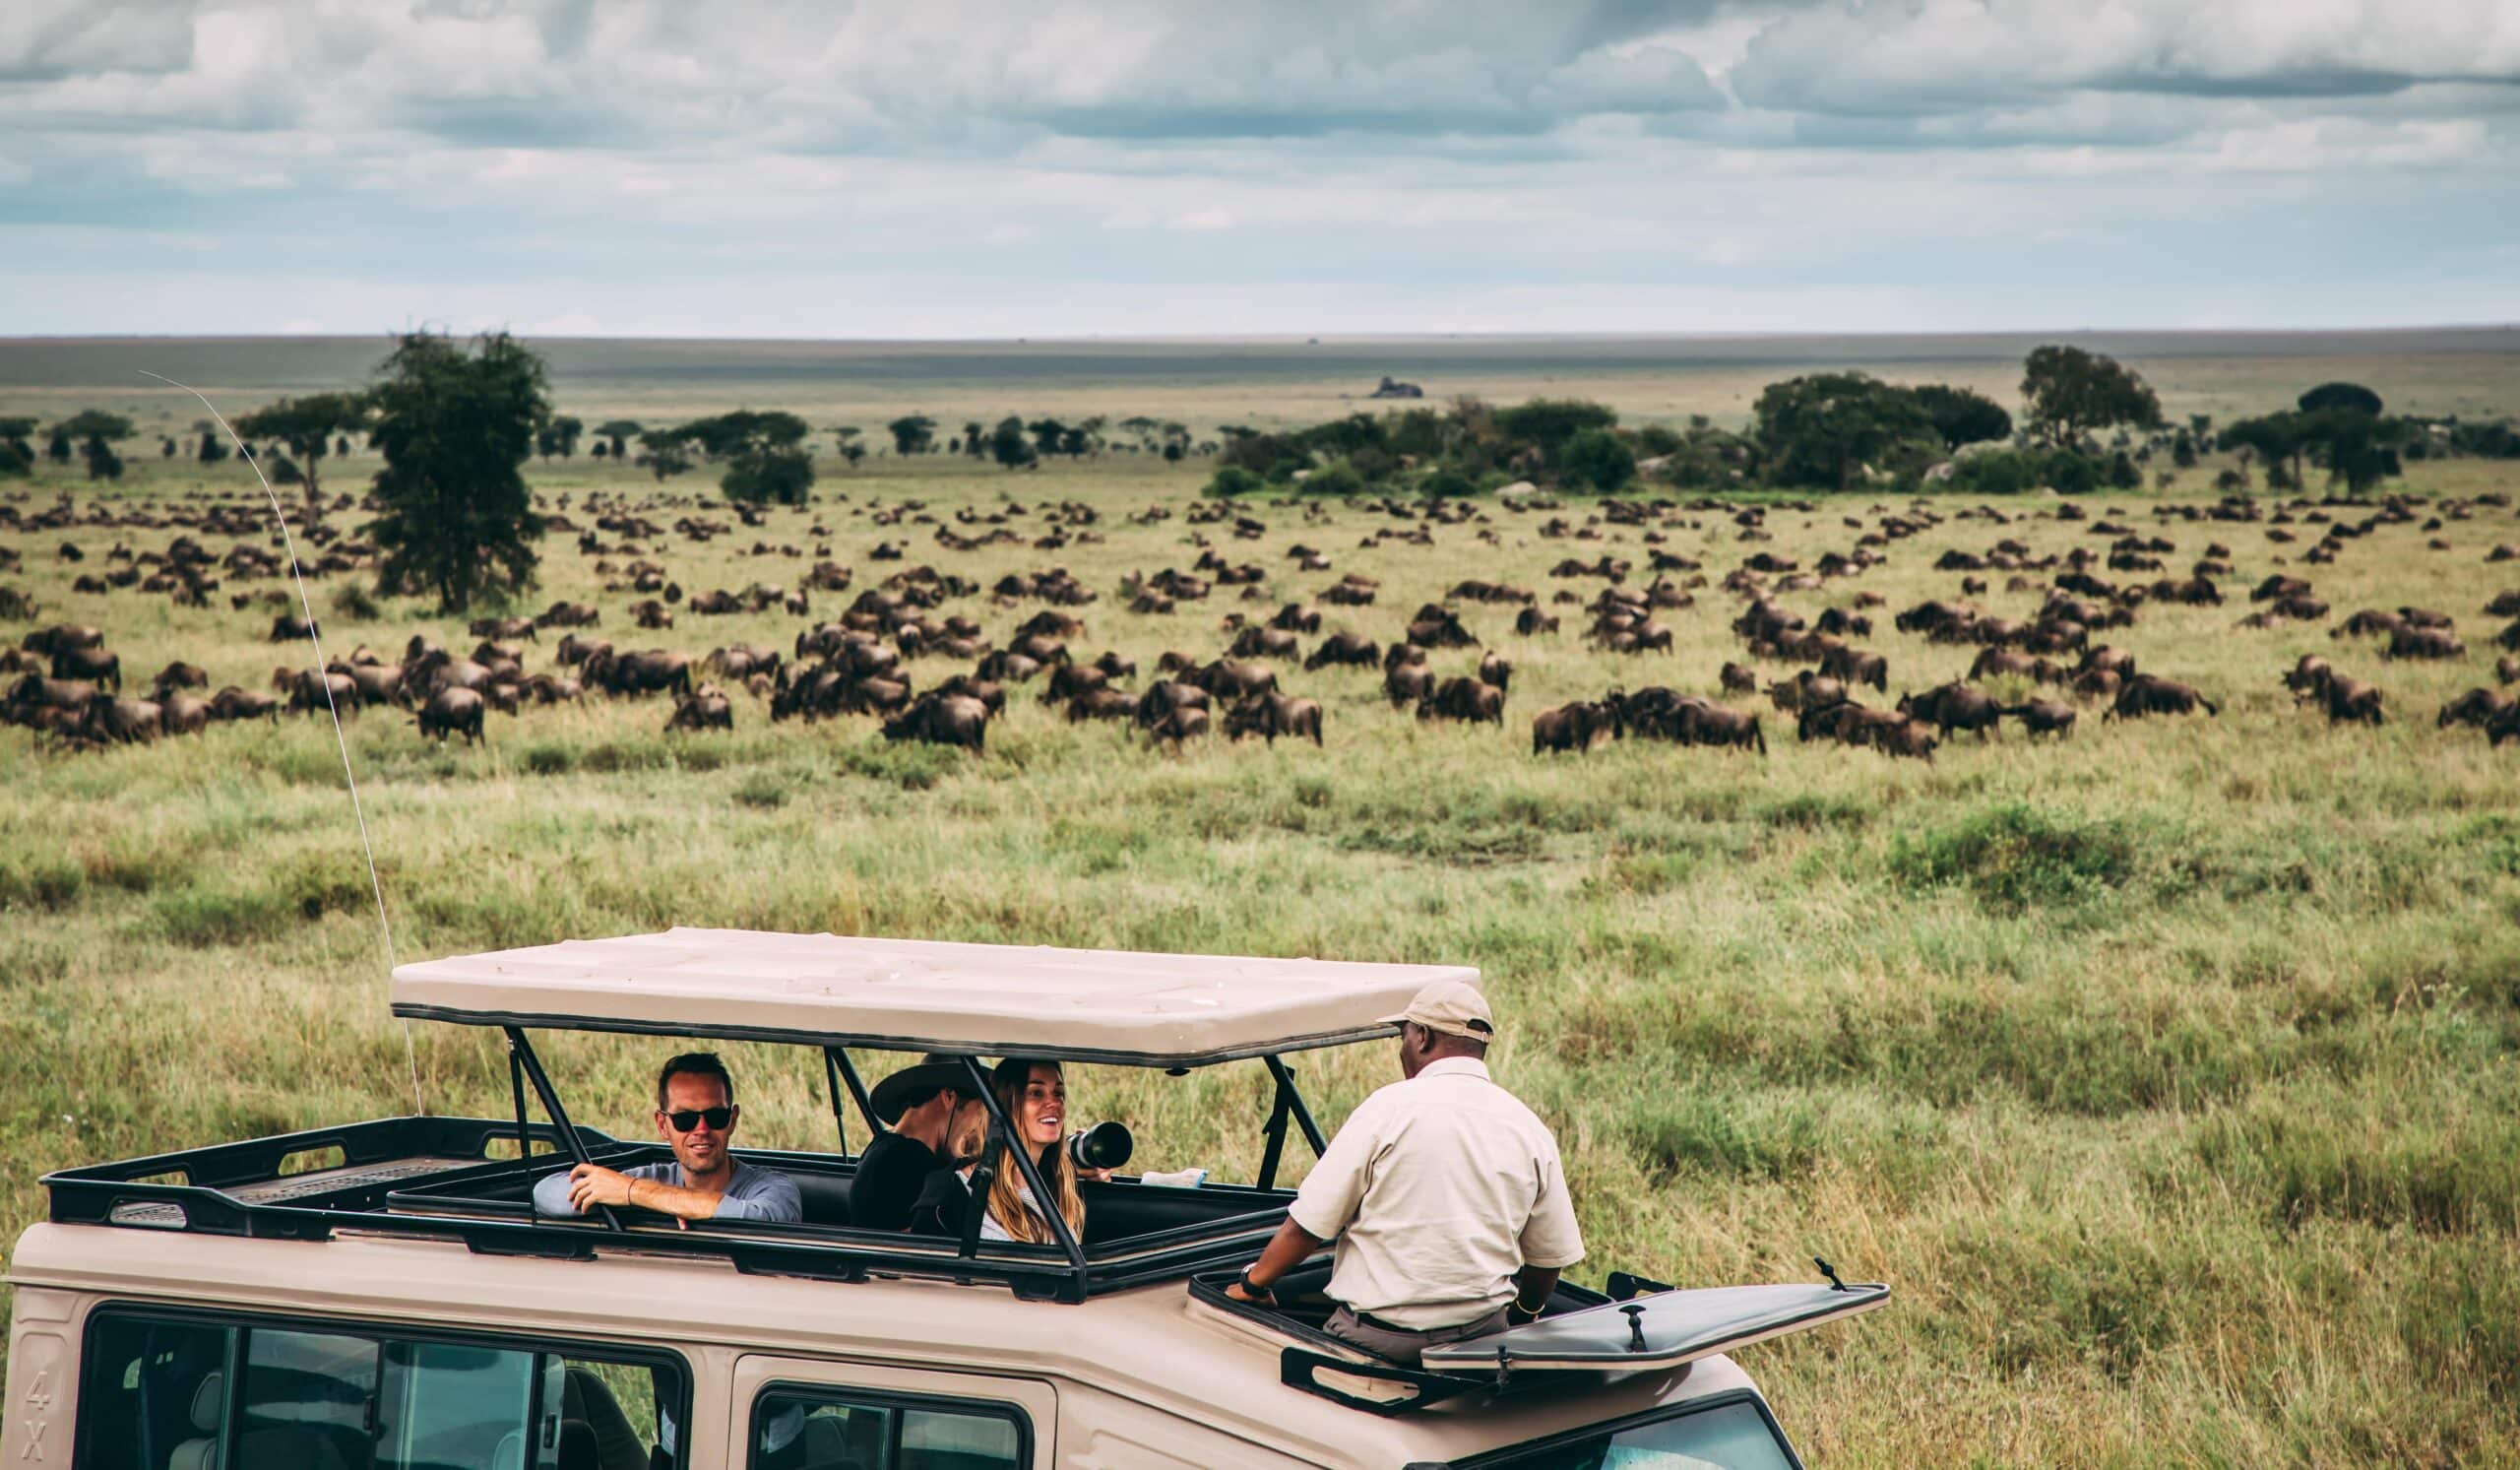 Tanzanie - meilleur moment pour voyager en tanzanie à l'échelle minimale - safari en tanzanie